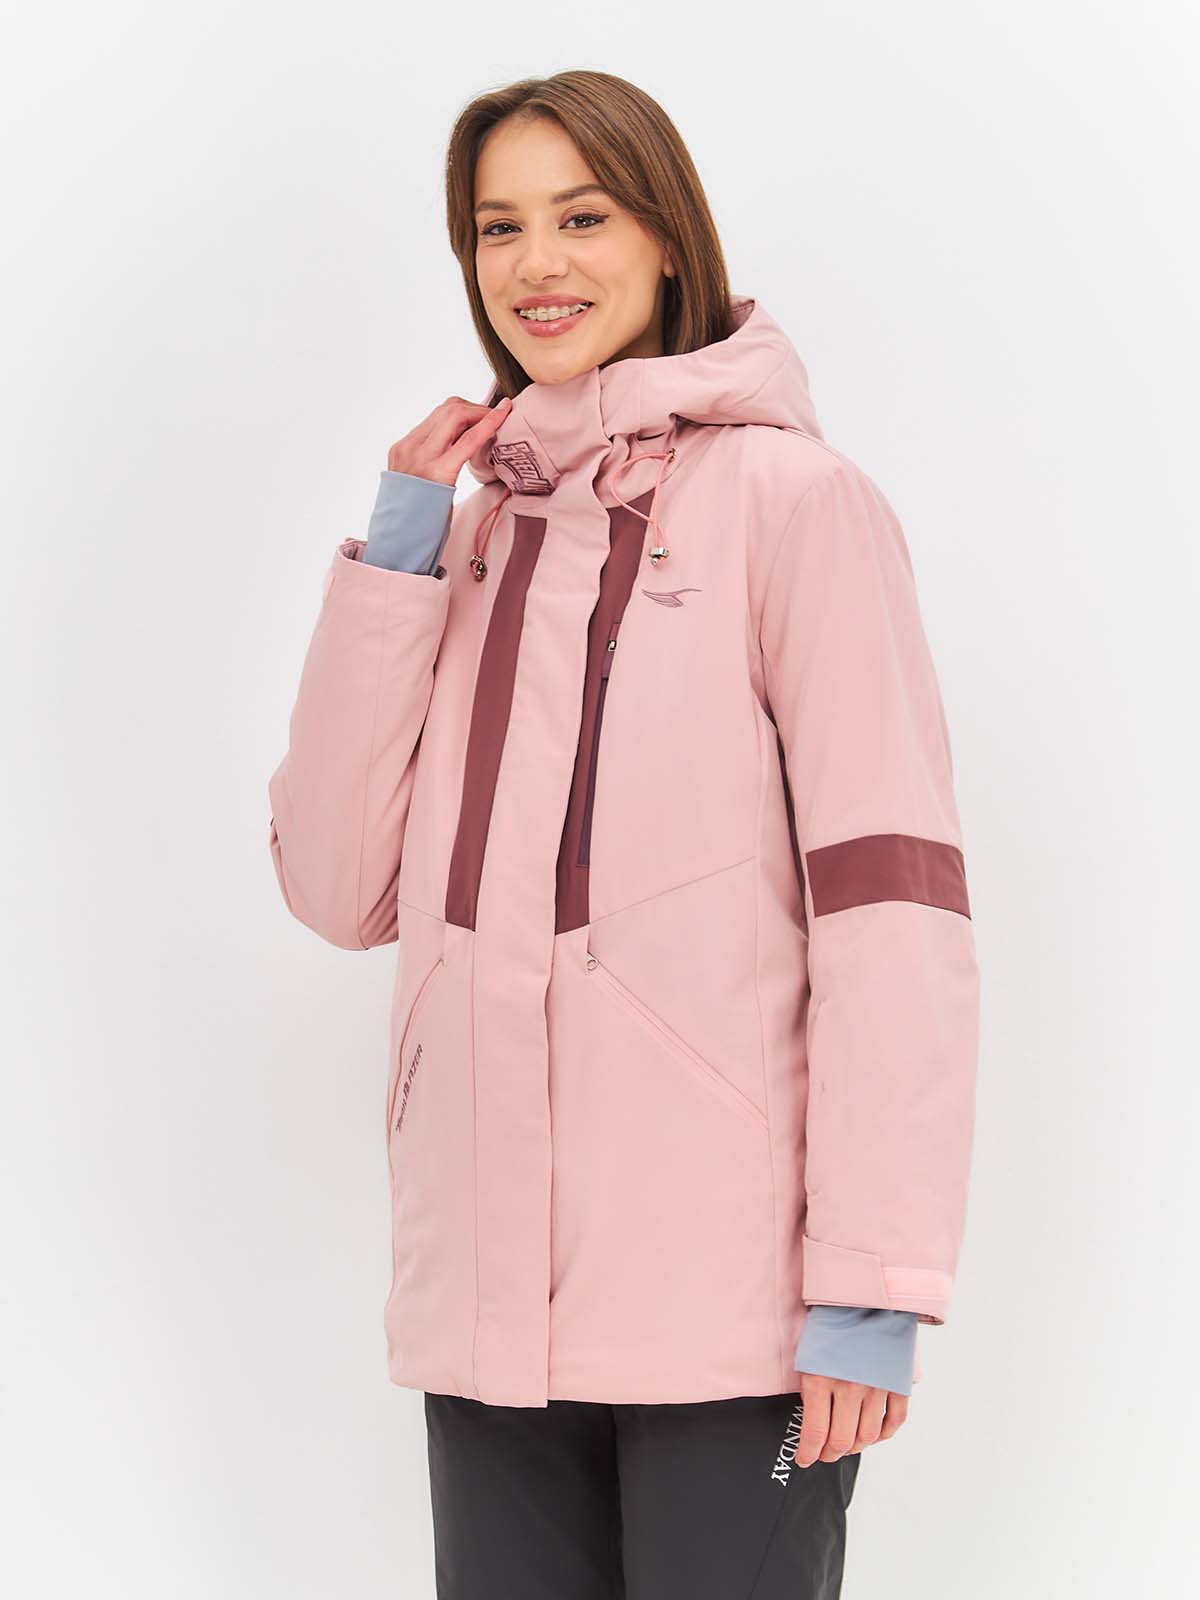 Куртка Tisentele Розовый, 847676 (44, m)